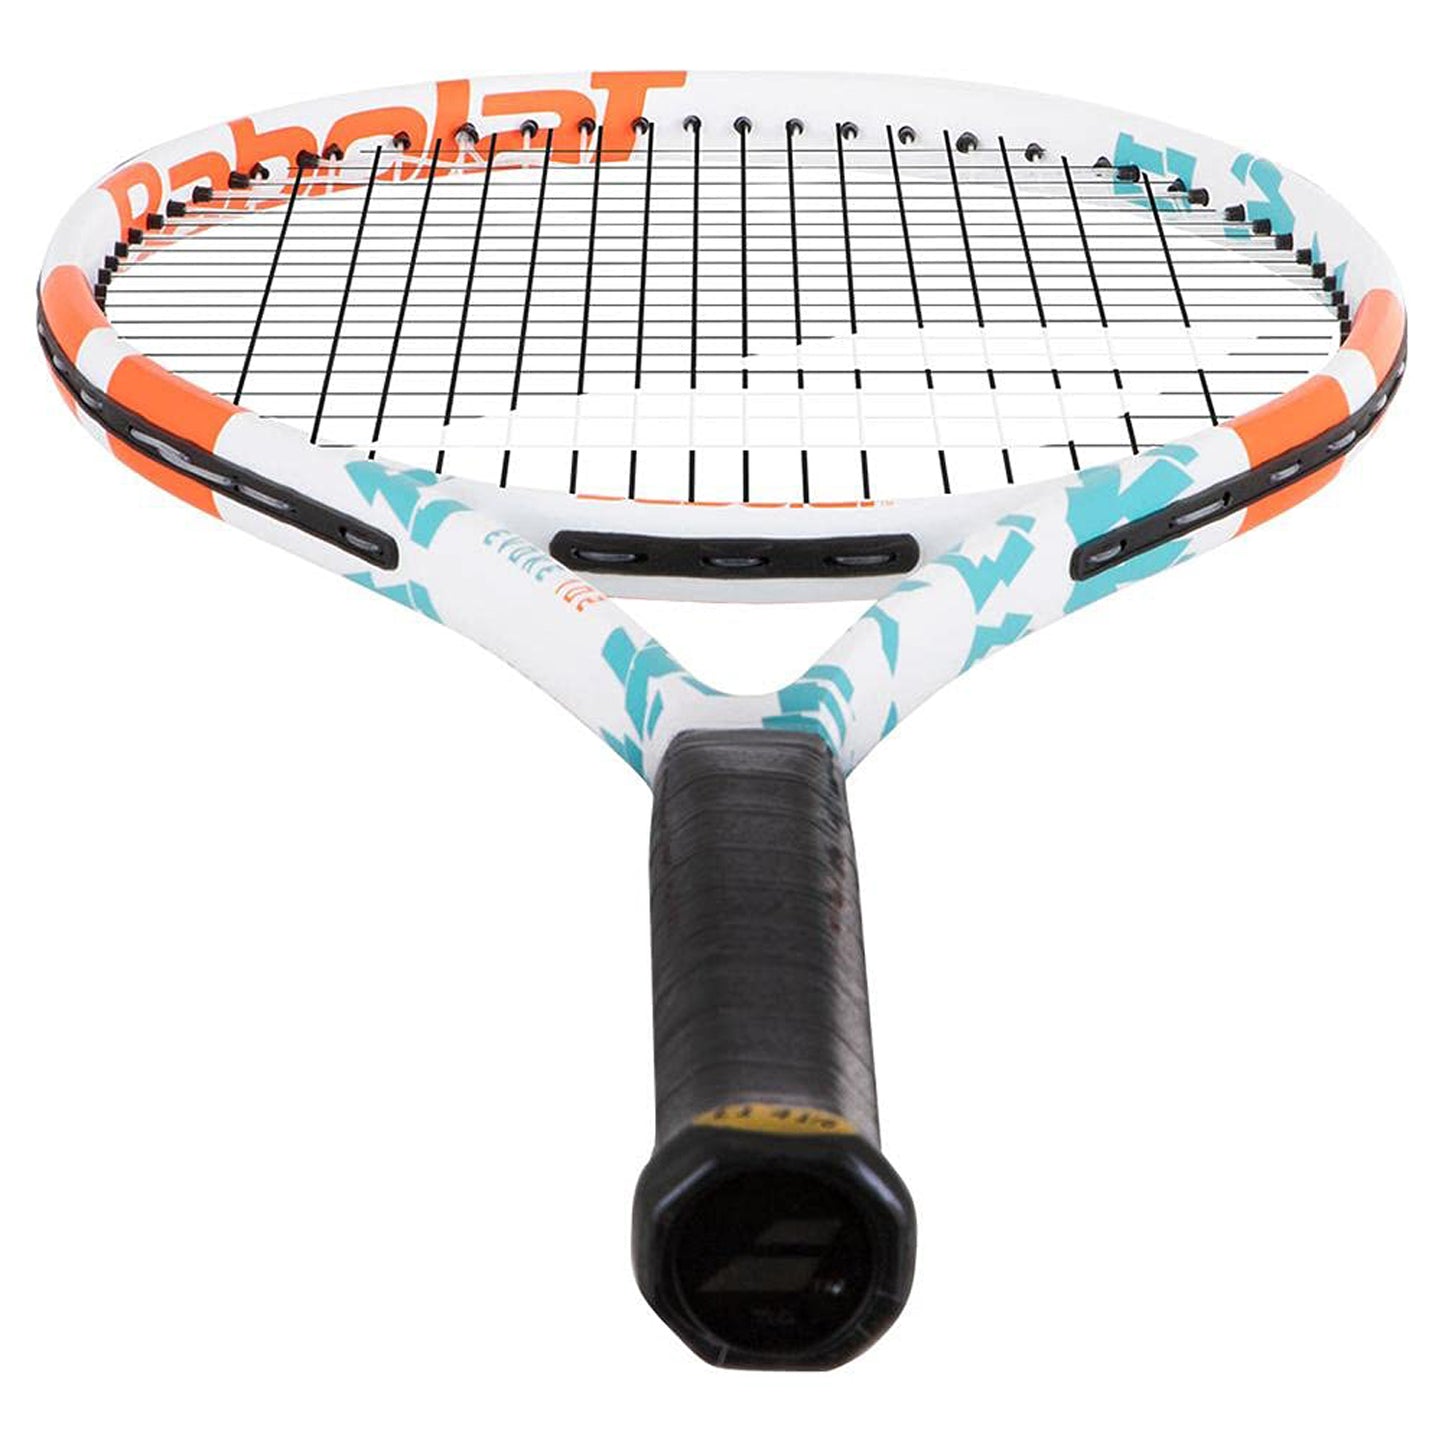 Babolat 1211225 Evoke 102 Strung Tennis Racquet 4 3/8, White/Blue/Orange - Best Price online Prokicksports.com